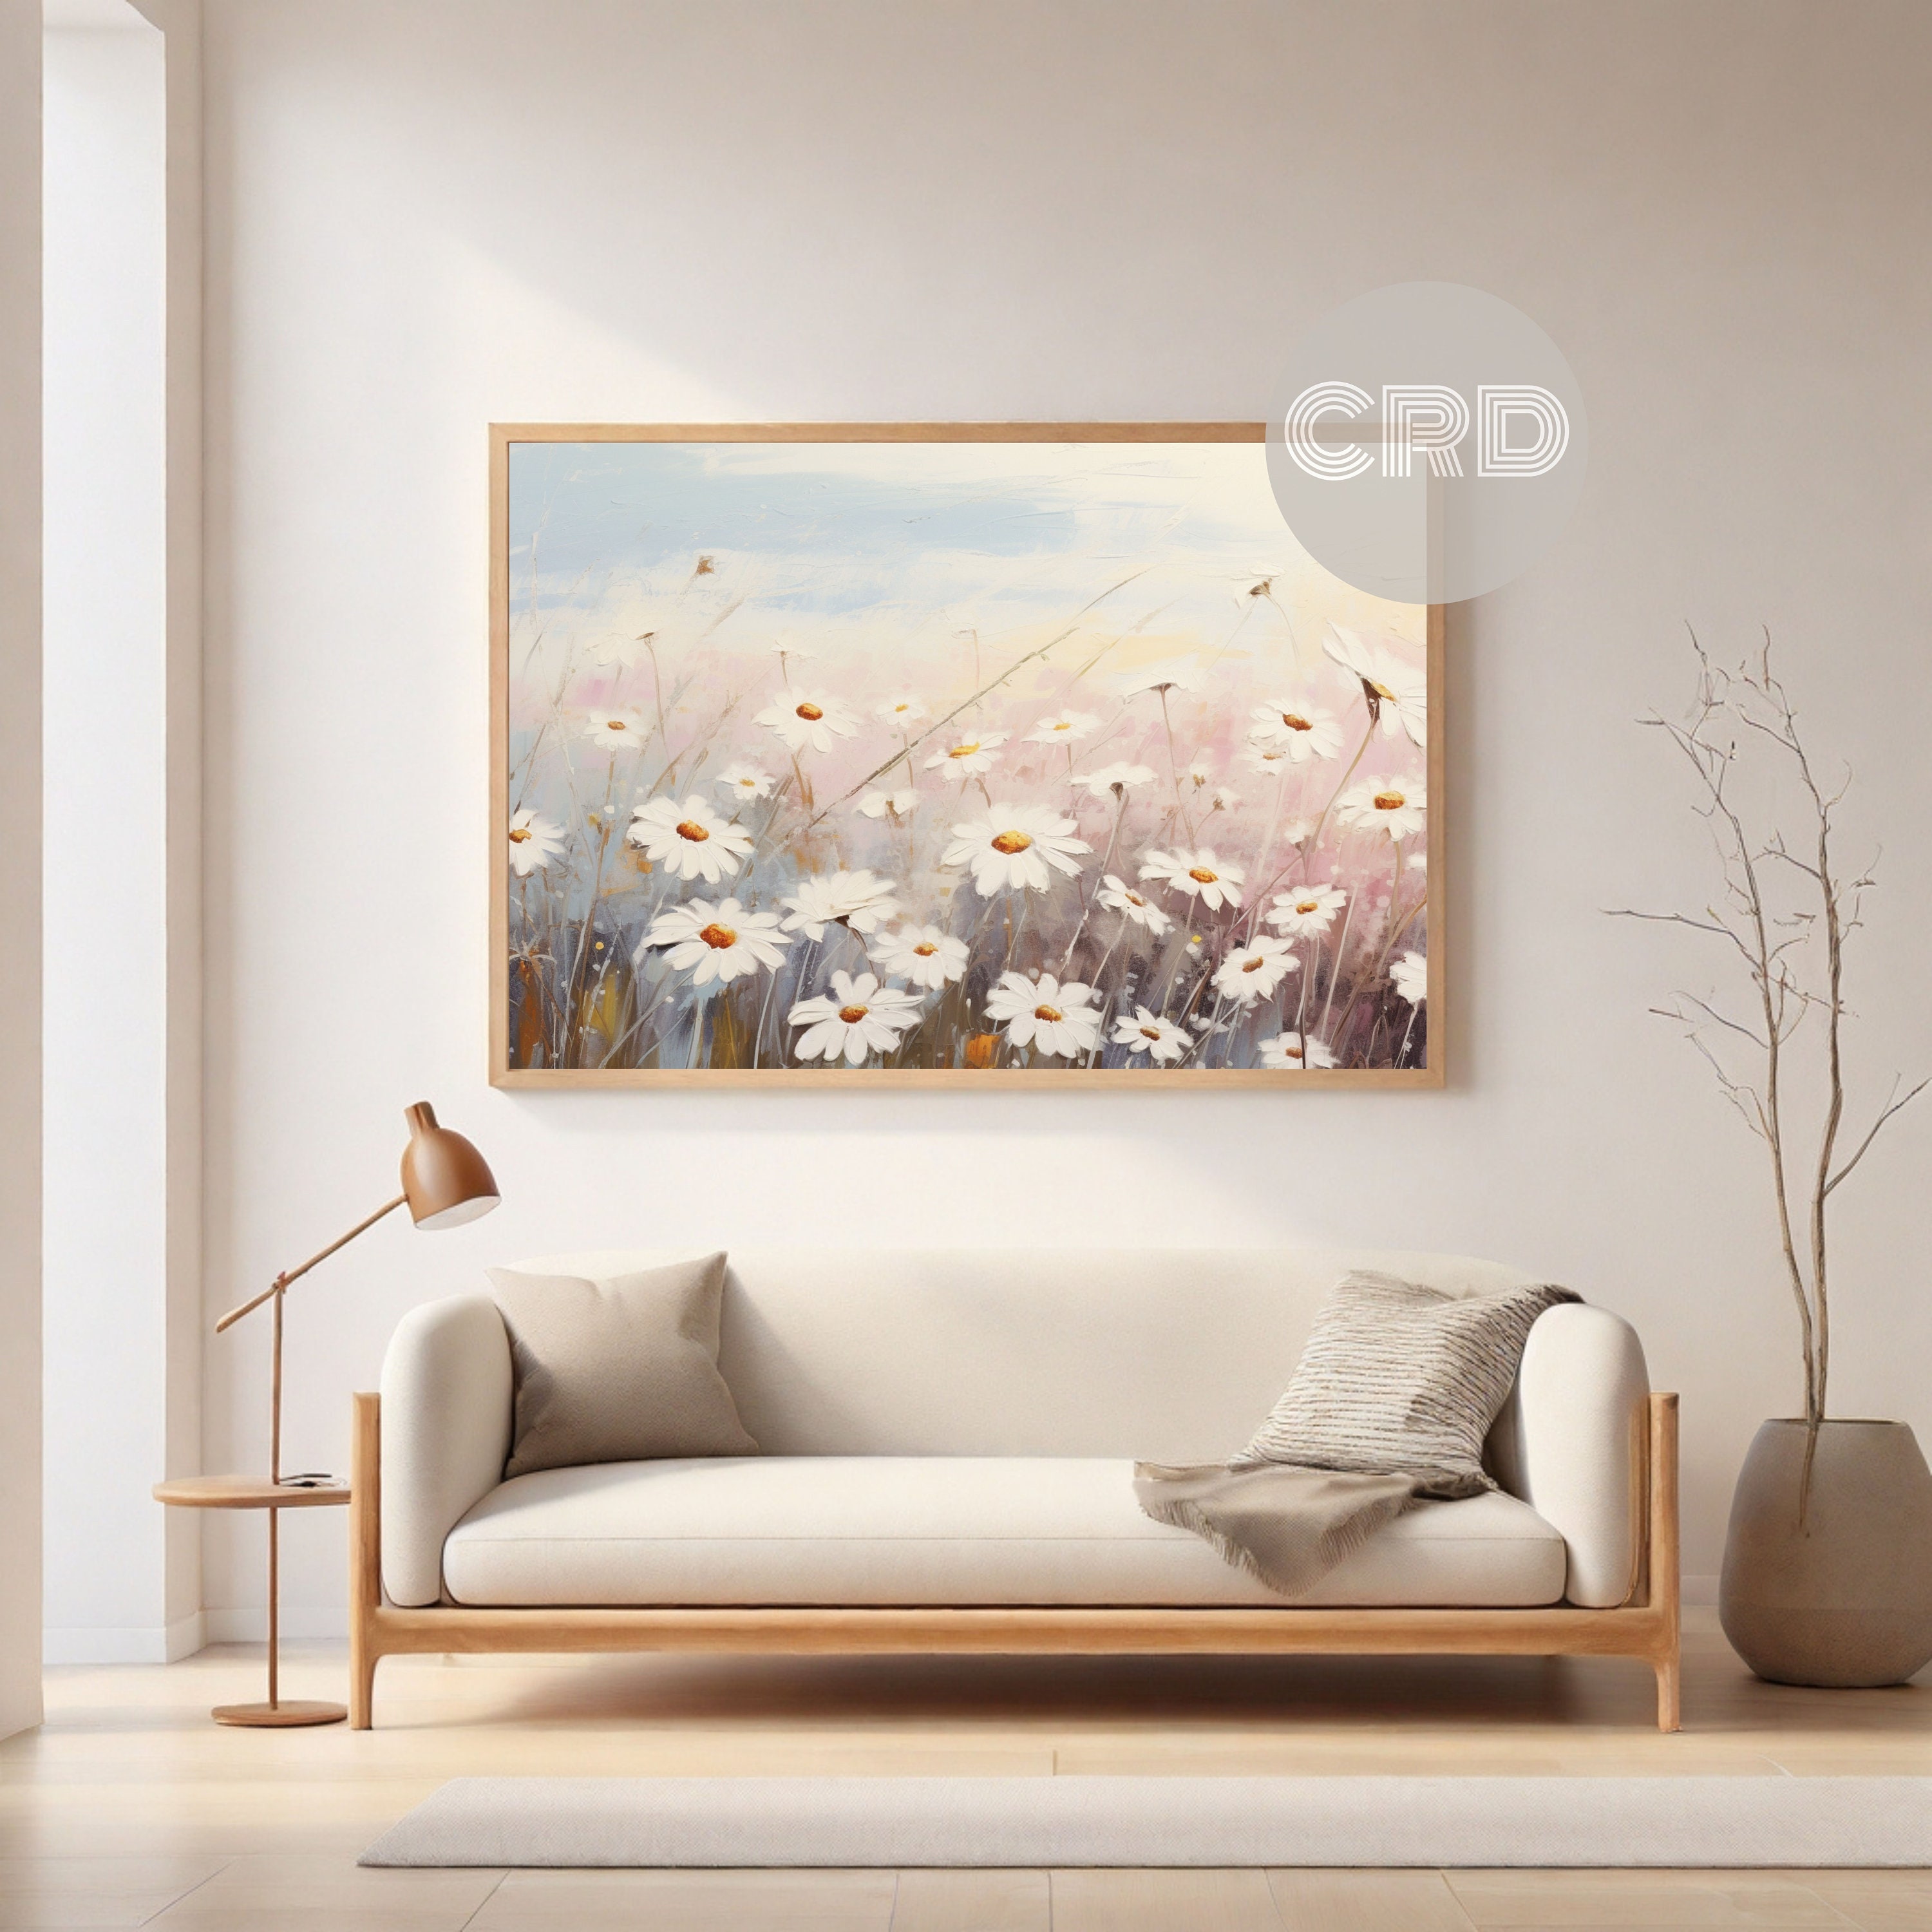 Textured Daisy Flower Frame TV Art Daisy Field With Soft Textural